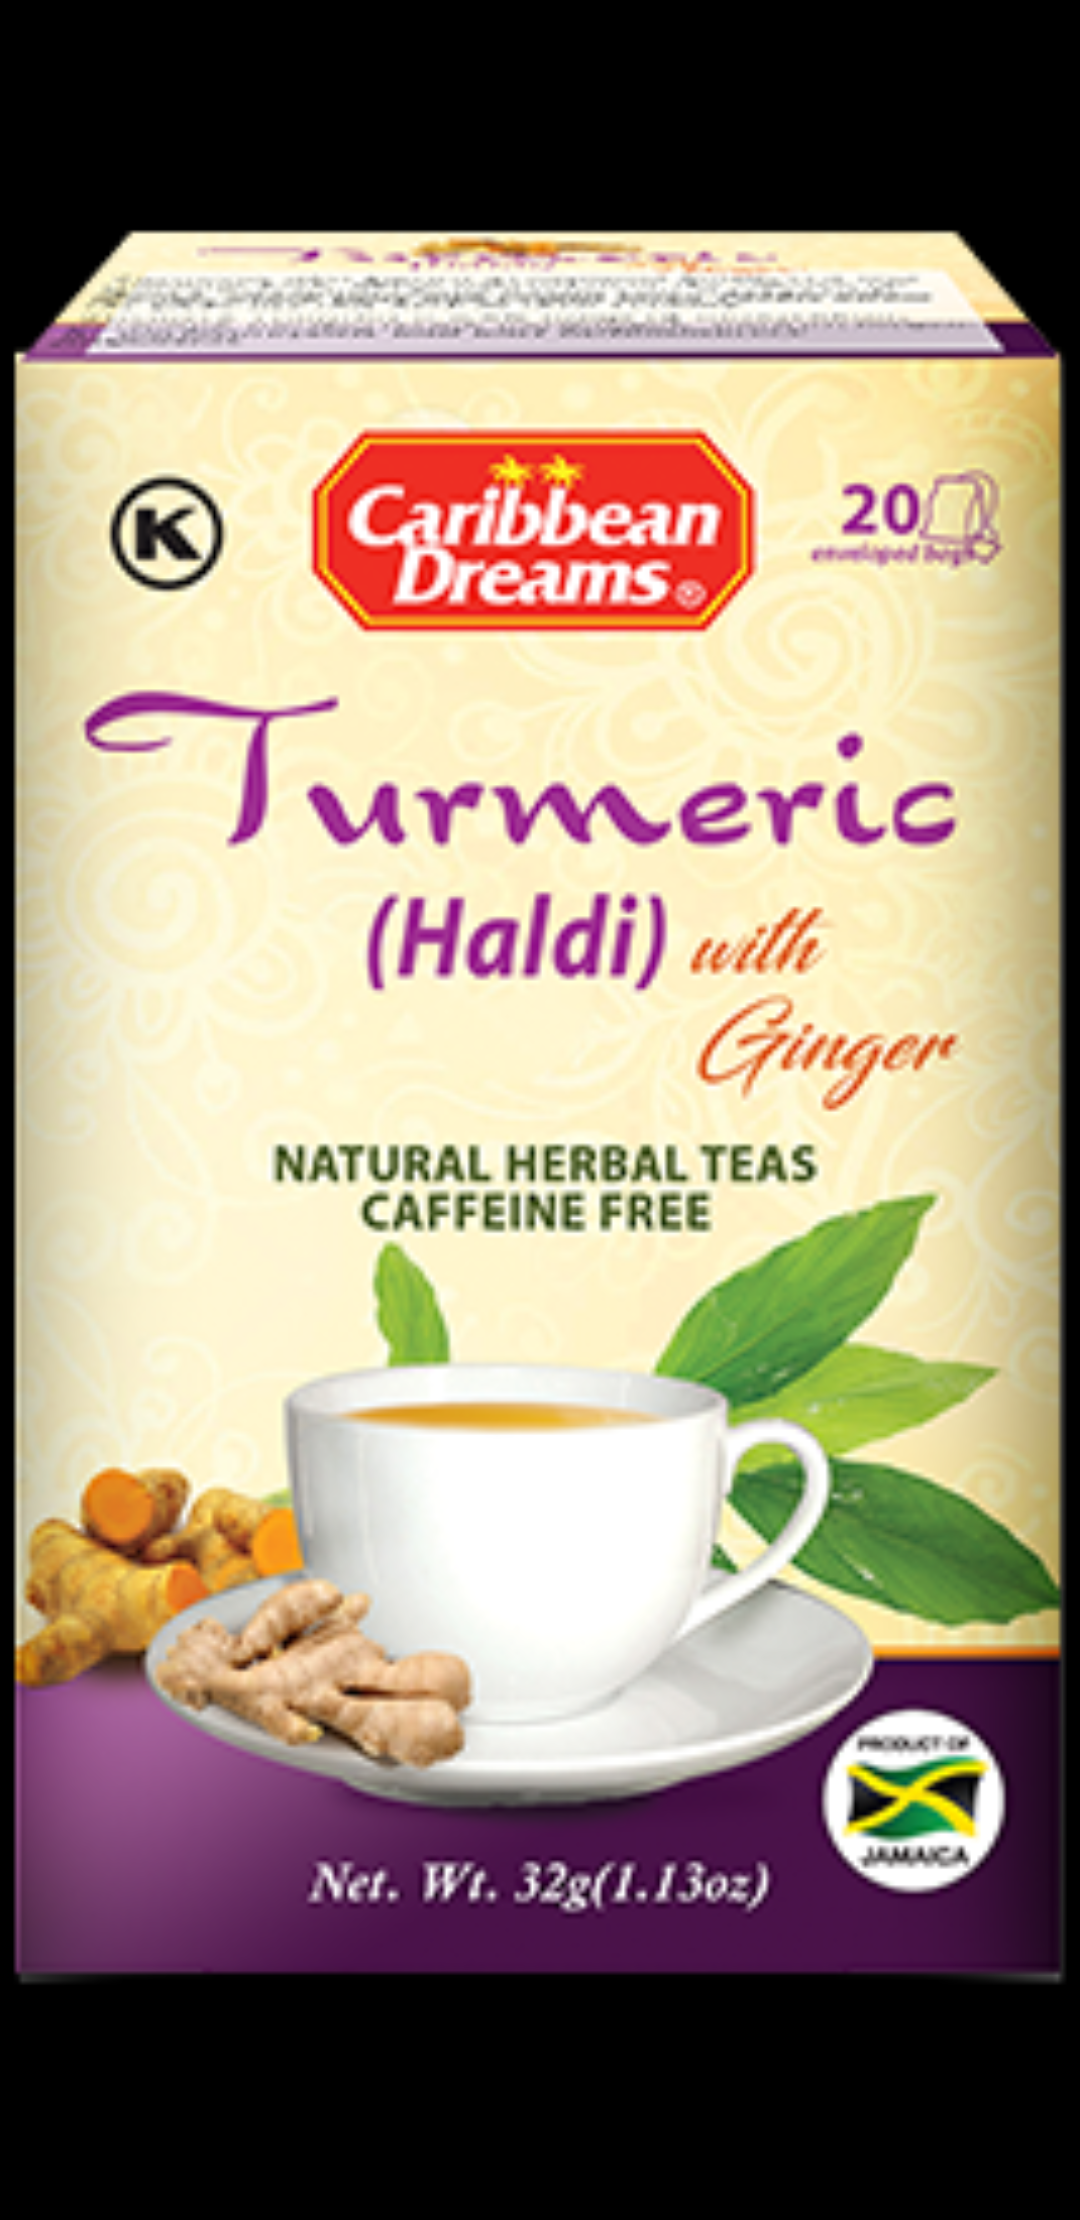 Turmeric and Ginger Tea